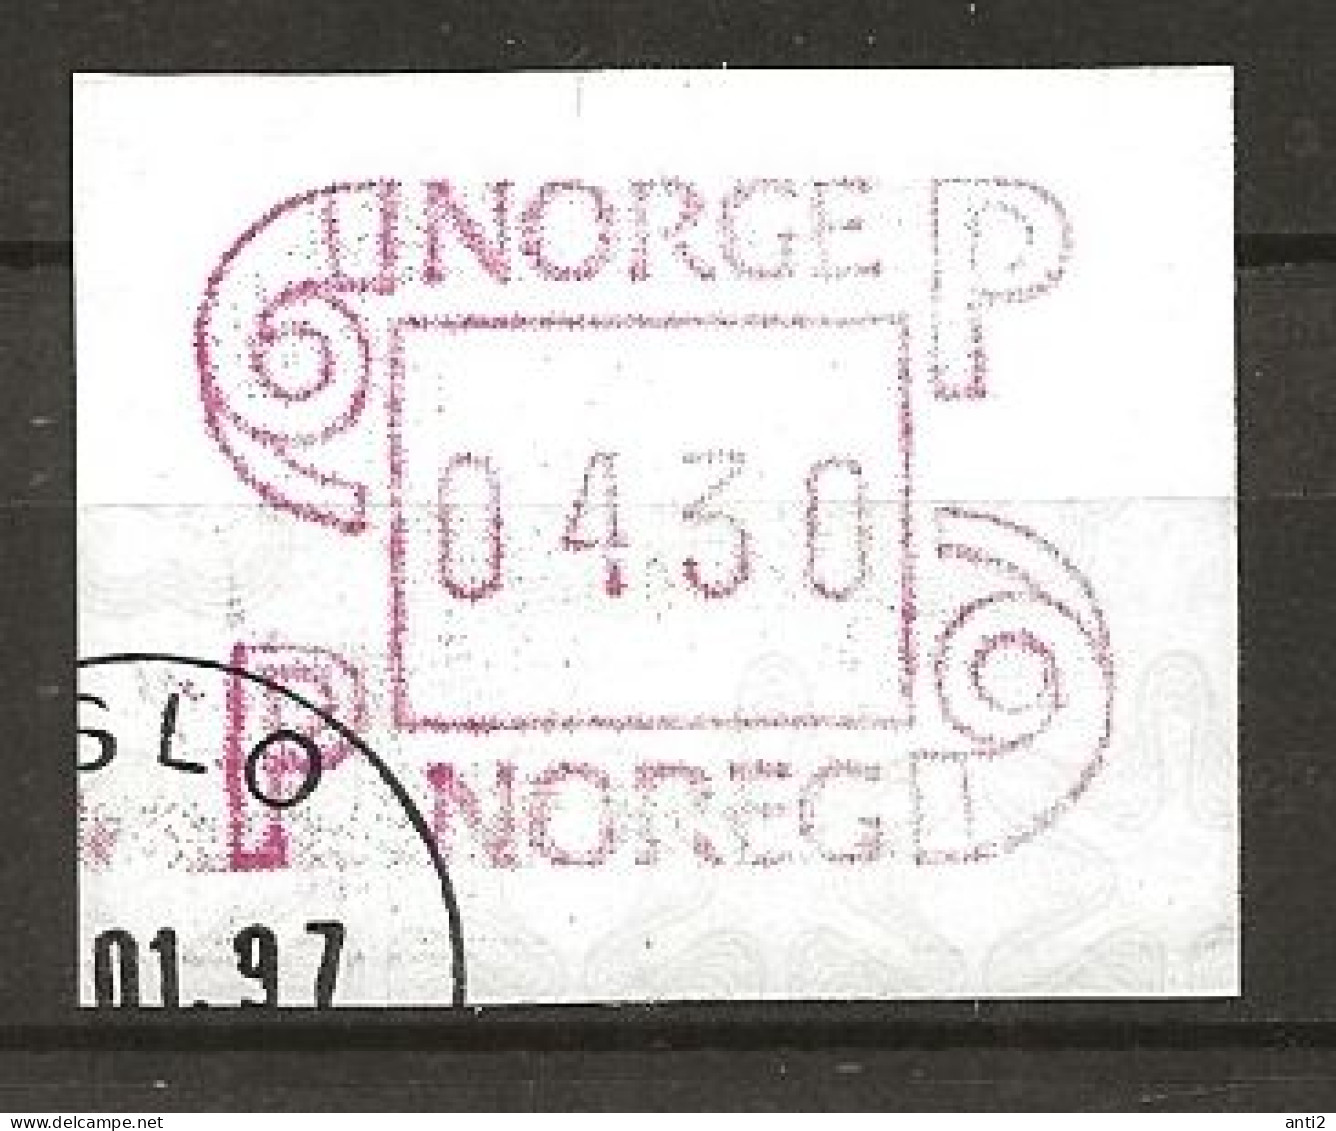 Norway 1997 ATM - Machine Label  NOK 4.30 - Vendel Machine Stamp Mi 3   - Cancelledn January 97 - Machine Labels [ATM]